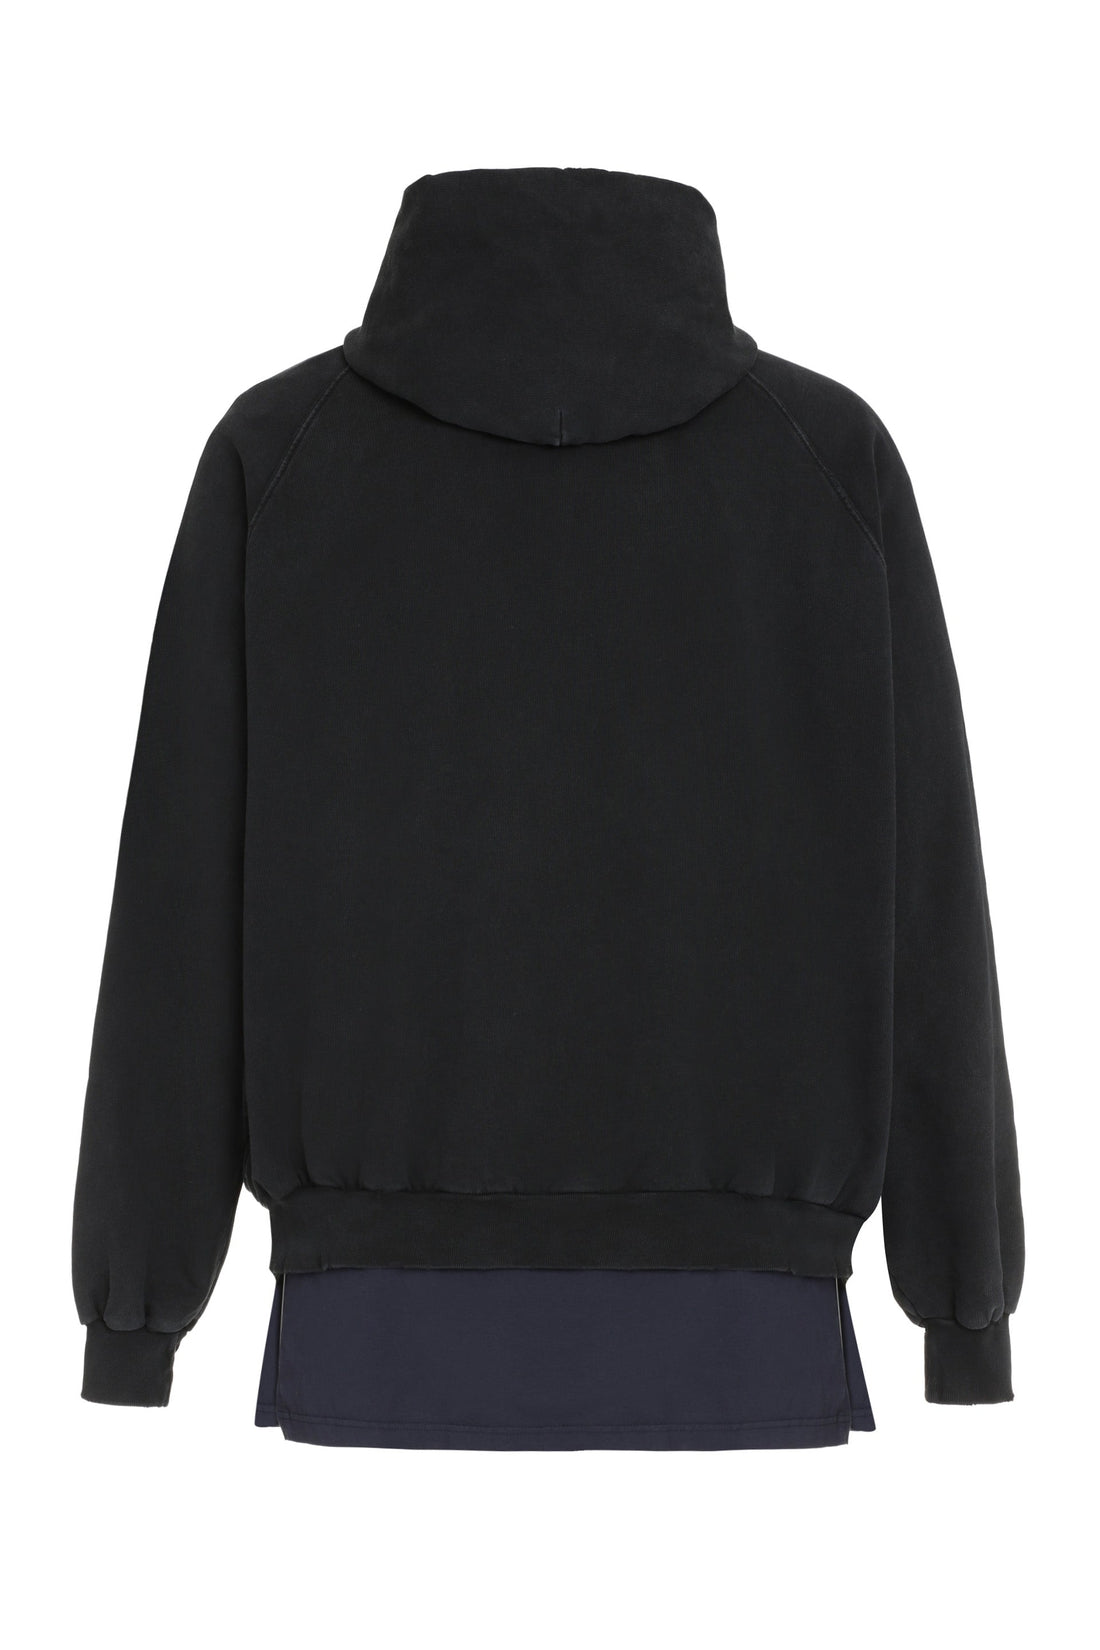 Balenciaga-OUTLET-SALE-Oversize hoodie-ARCHIVIST